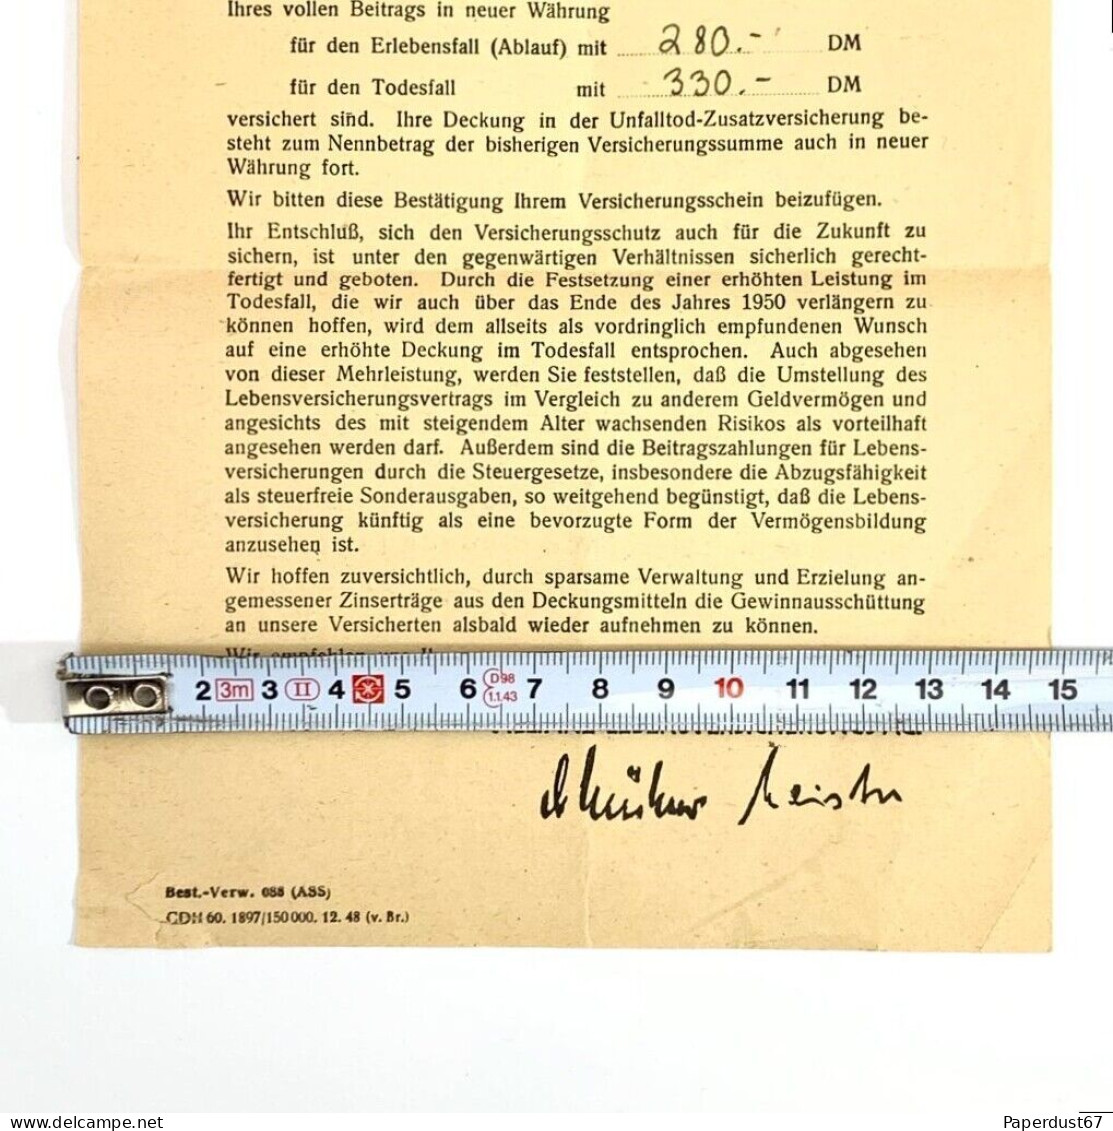 German Life Insurance 1948 Allianz Lebensversicherungs 330 Deutsche Mark